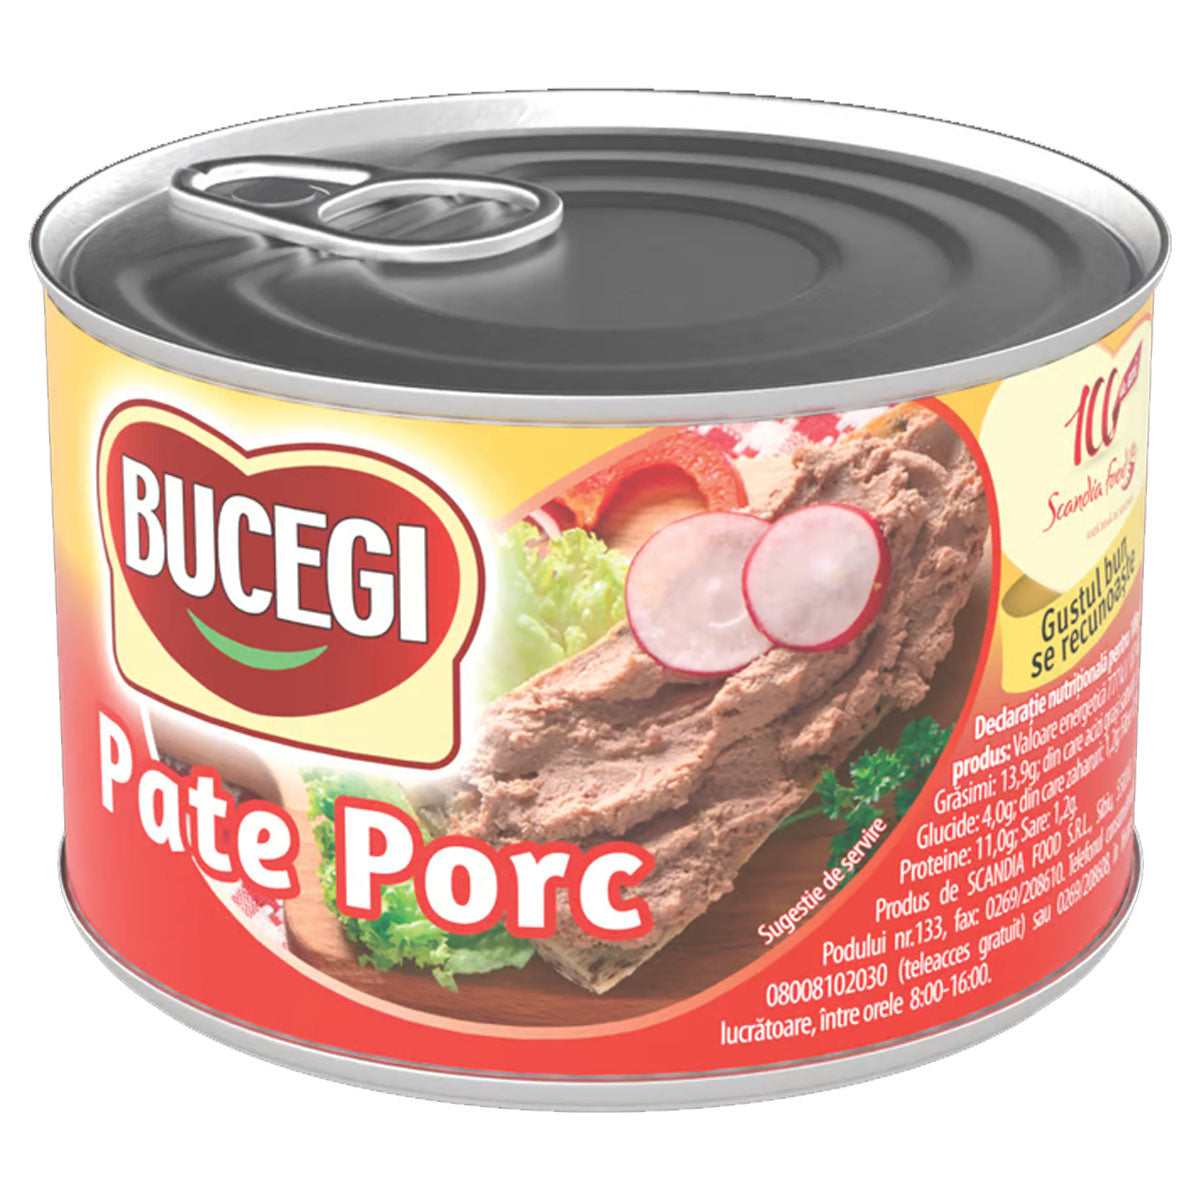 Bucegi - Pork Liver Pate (Pate Porc) - 200g - Continental Food Store